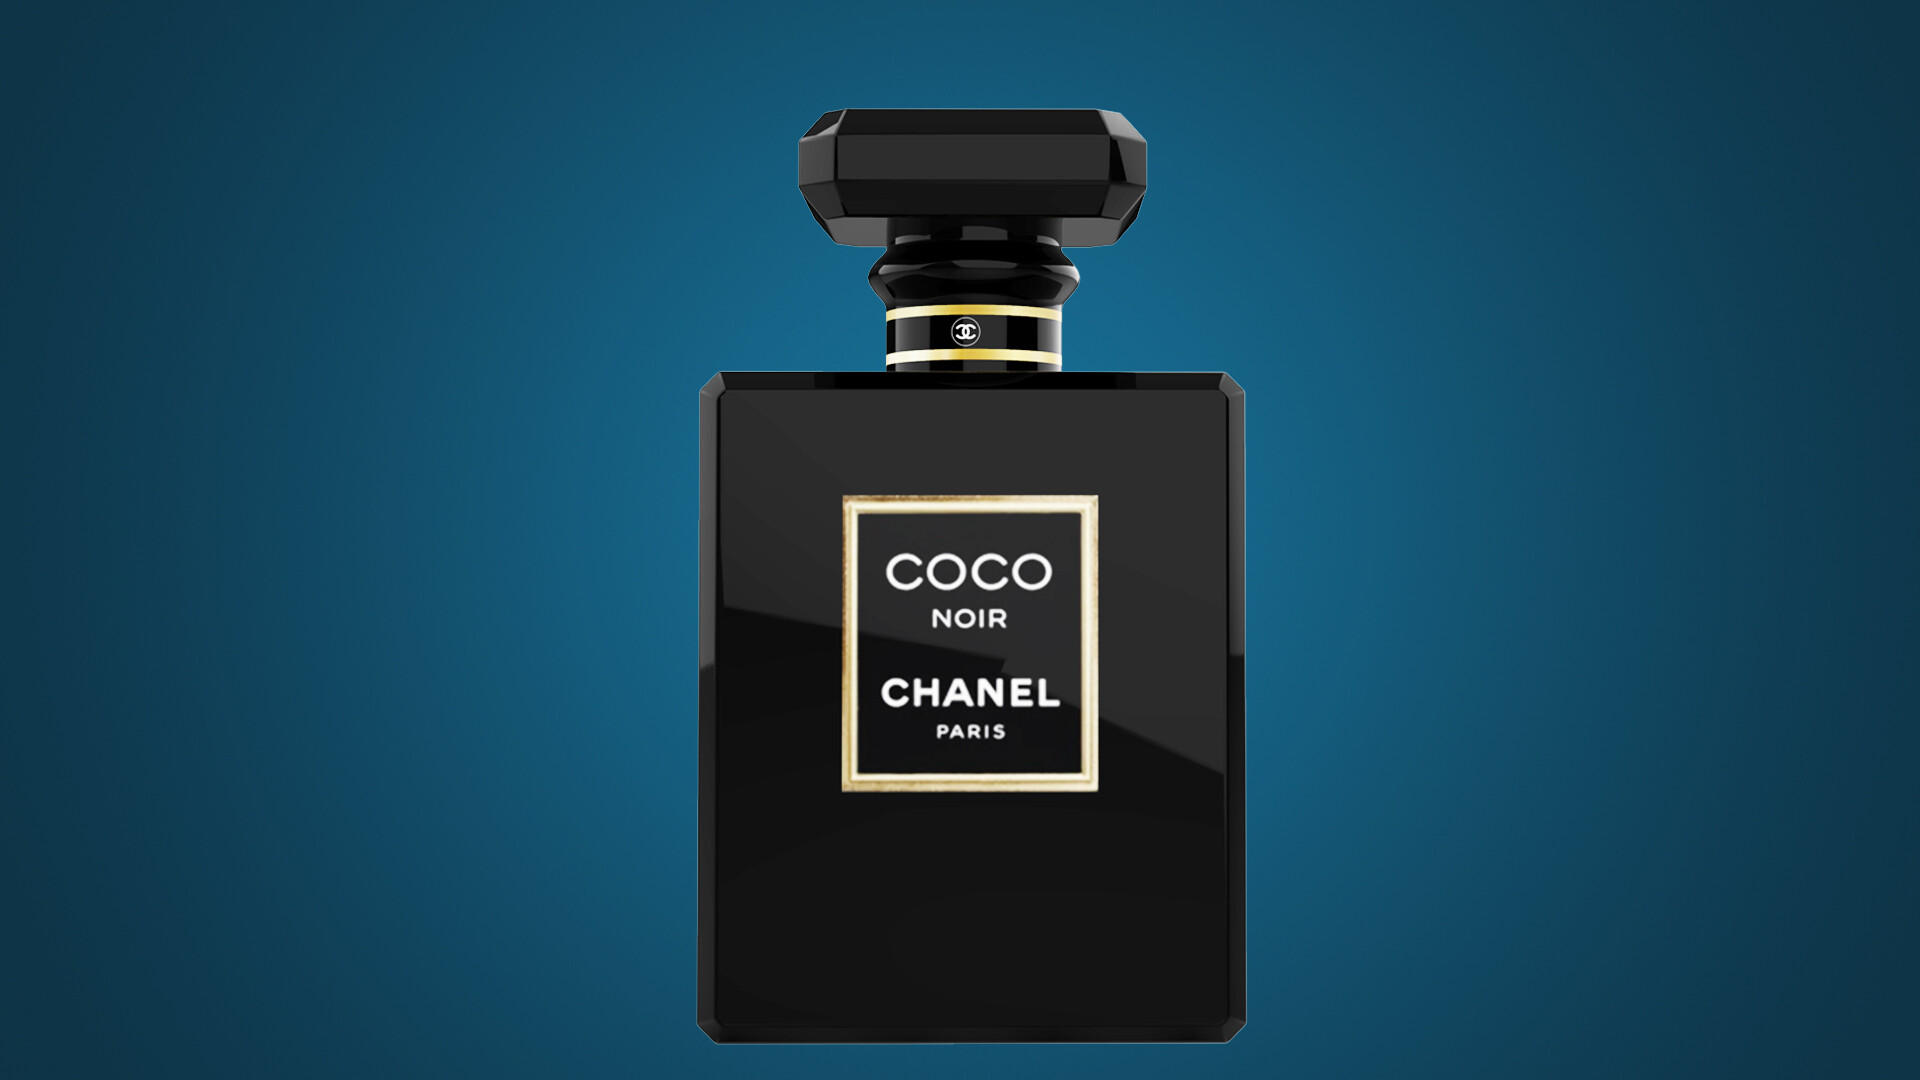 ArtStation - Coco Noir Chanel Perfume 3d model (Private Work)